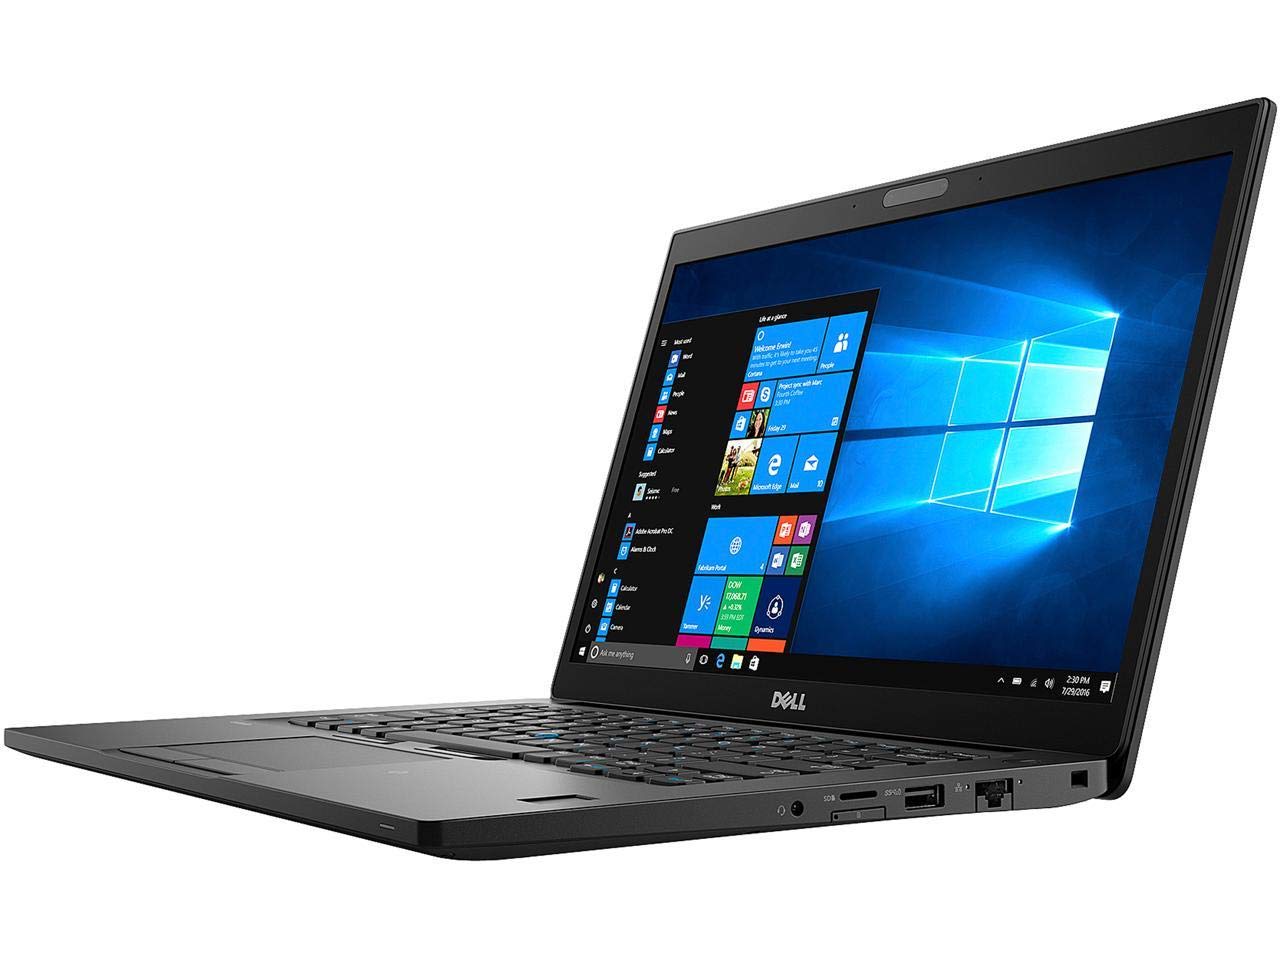 Dell Latitude 7490 Laptop FHD Notebook PC, Intel Core i5-8350U Processor, 8GB Ram, 256GB SSD, Webcam, WiFi, Bluetooth, HDMI, Type C, Windows 10 Professional (Renewed)